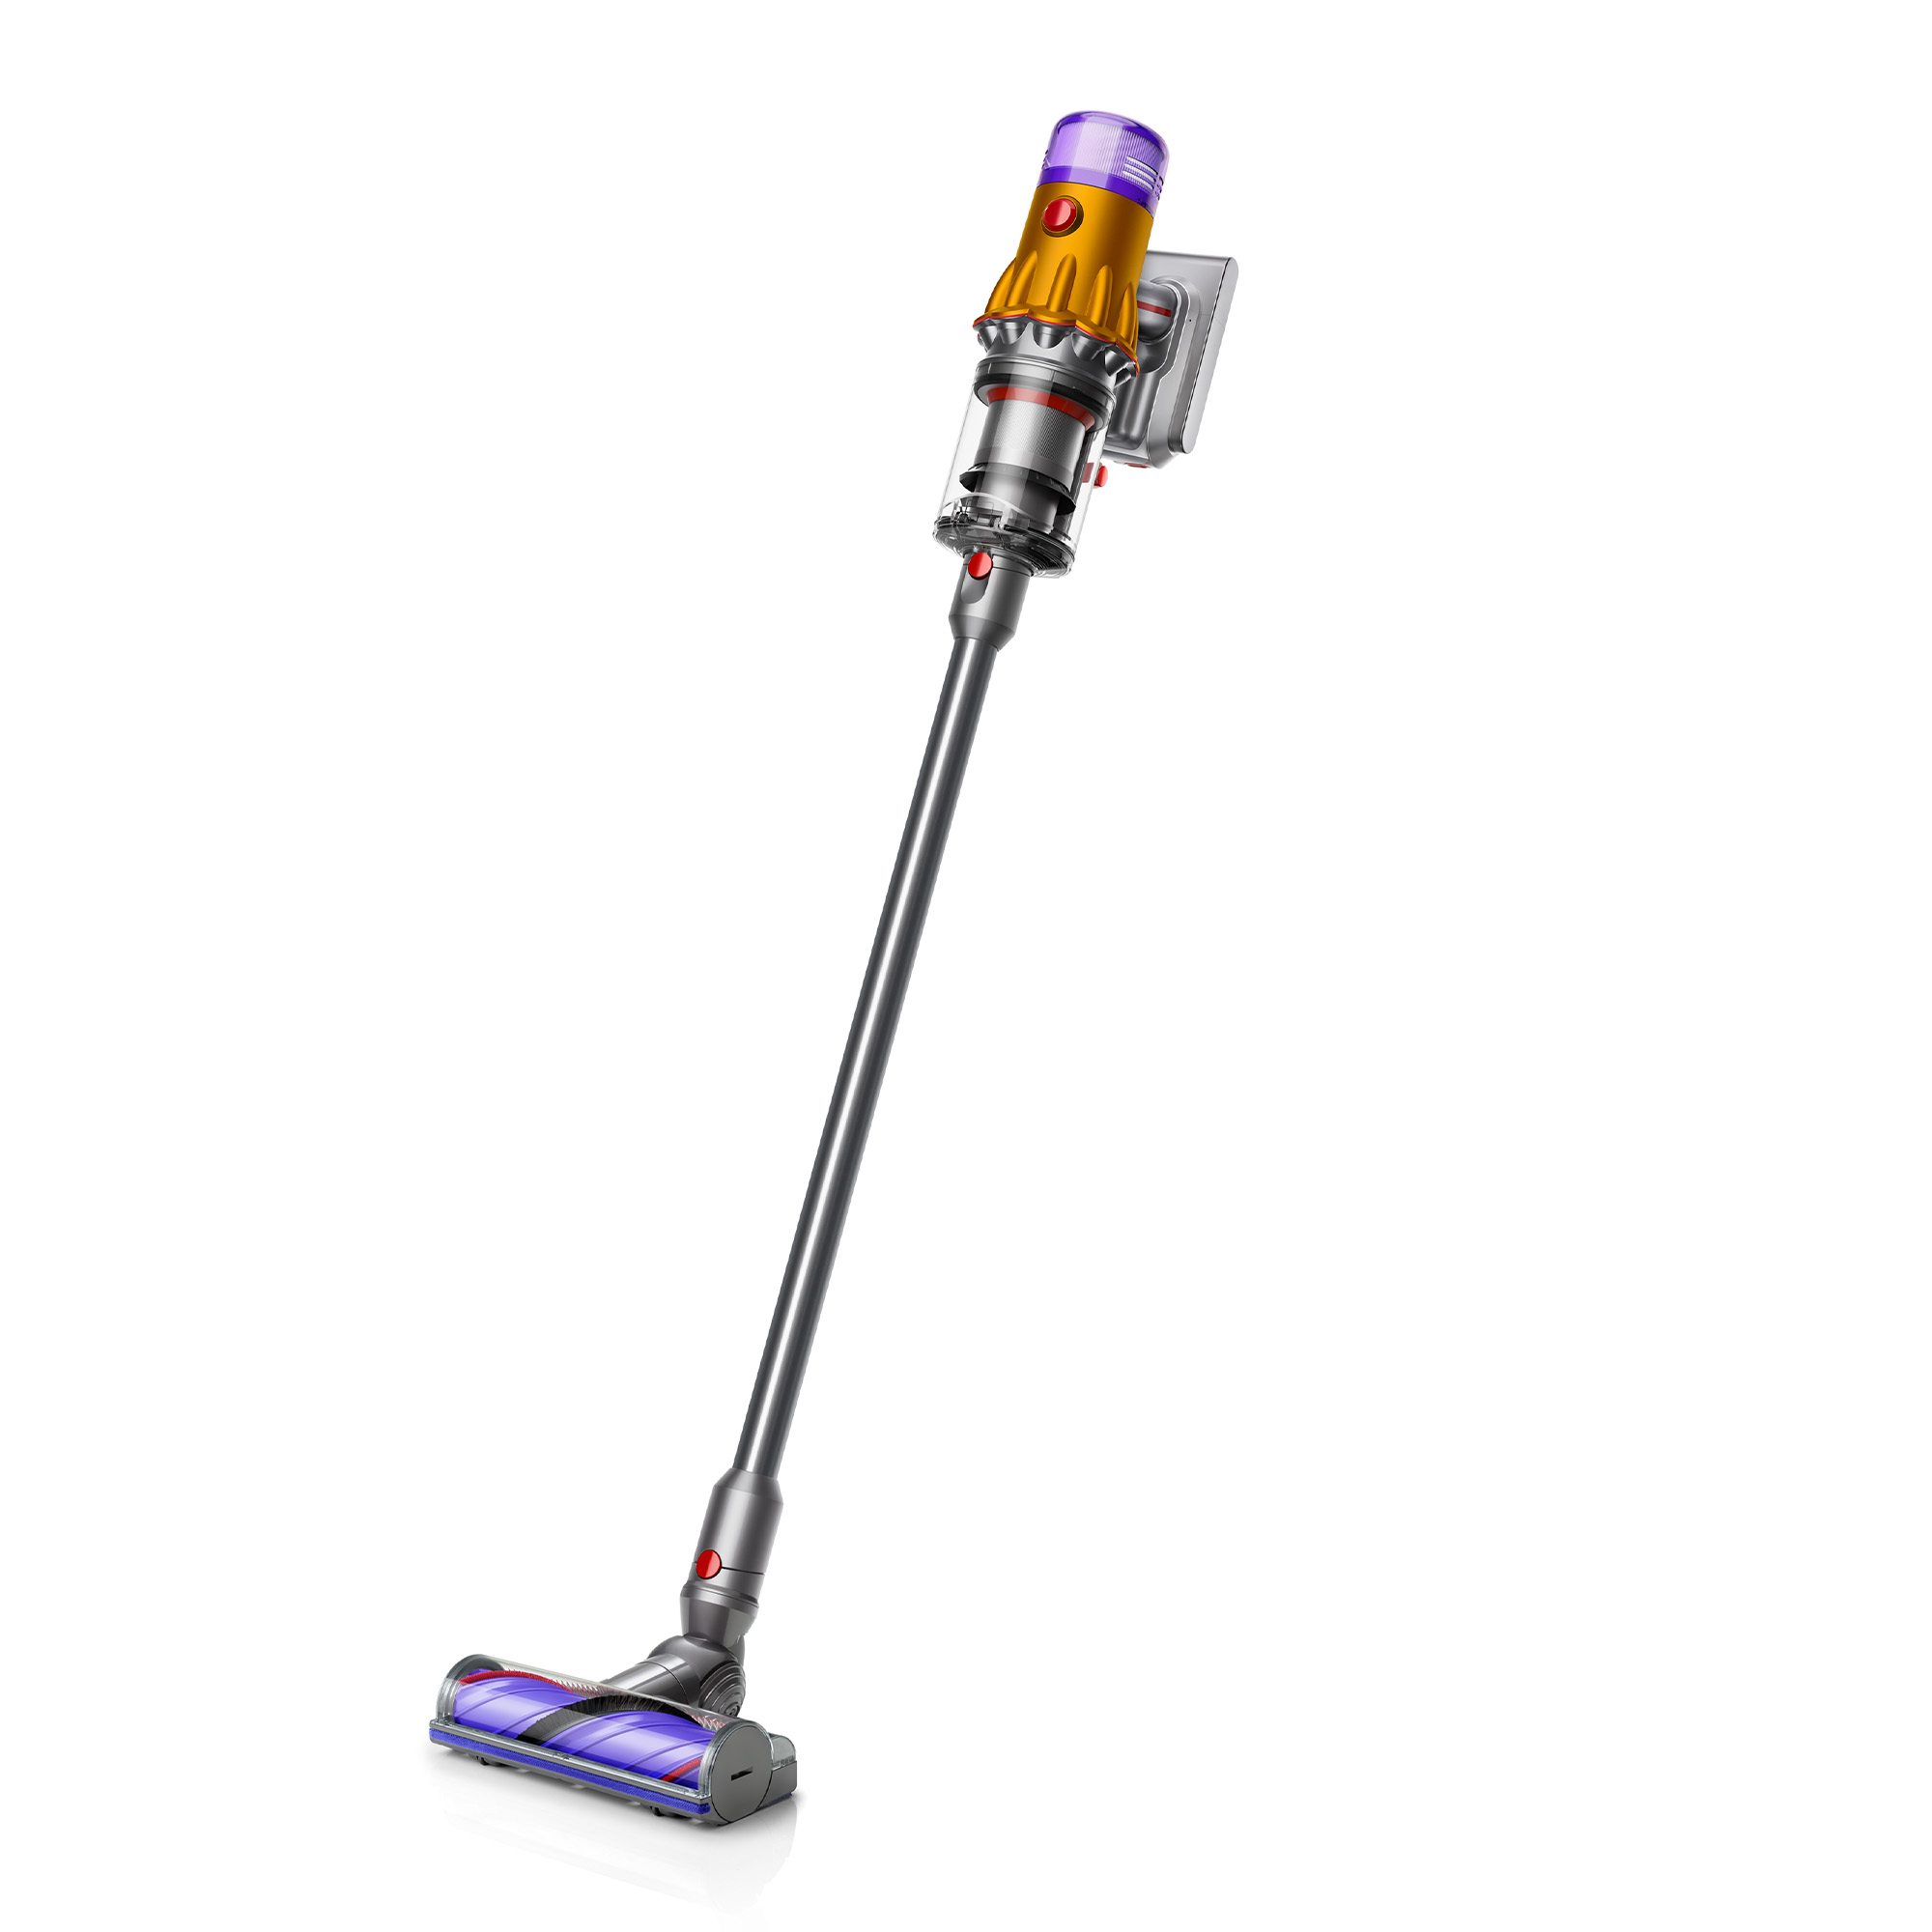 Dyson V12 Detect Slim Cordless Vacuum Cleaner, Yellow